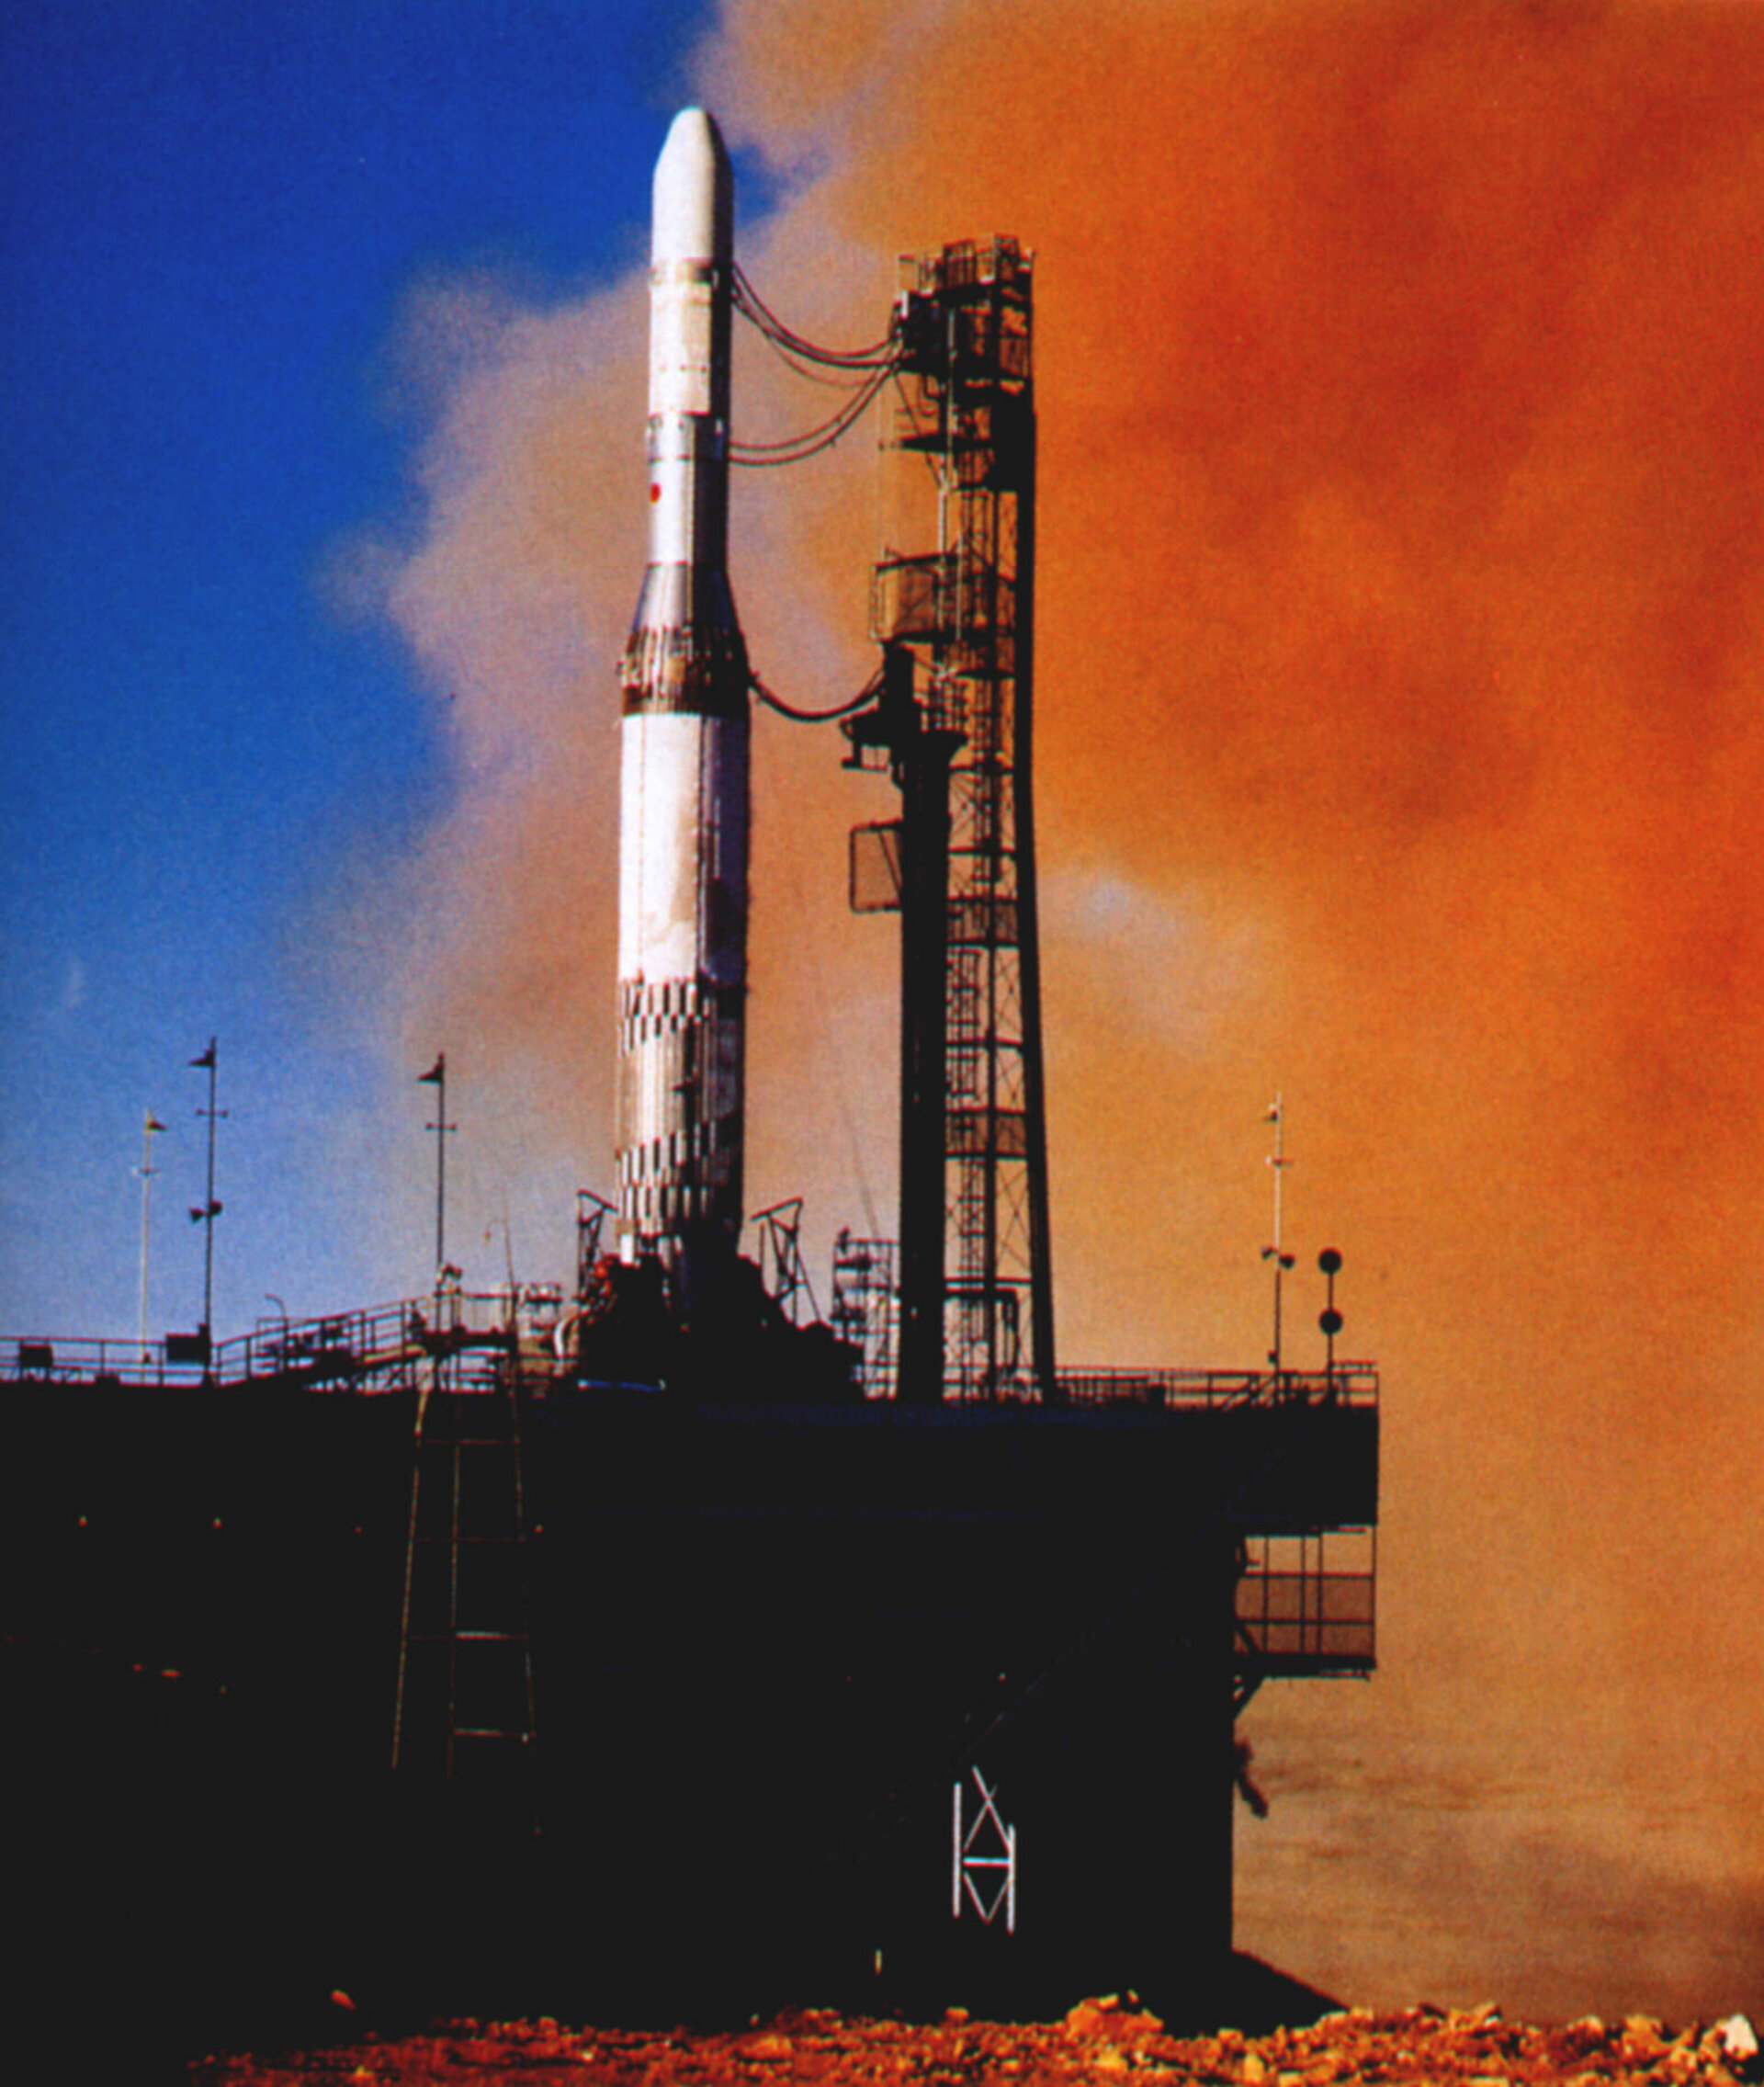 Europa launcher test in Woomera, Australia. 1966